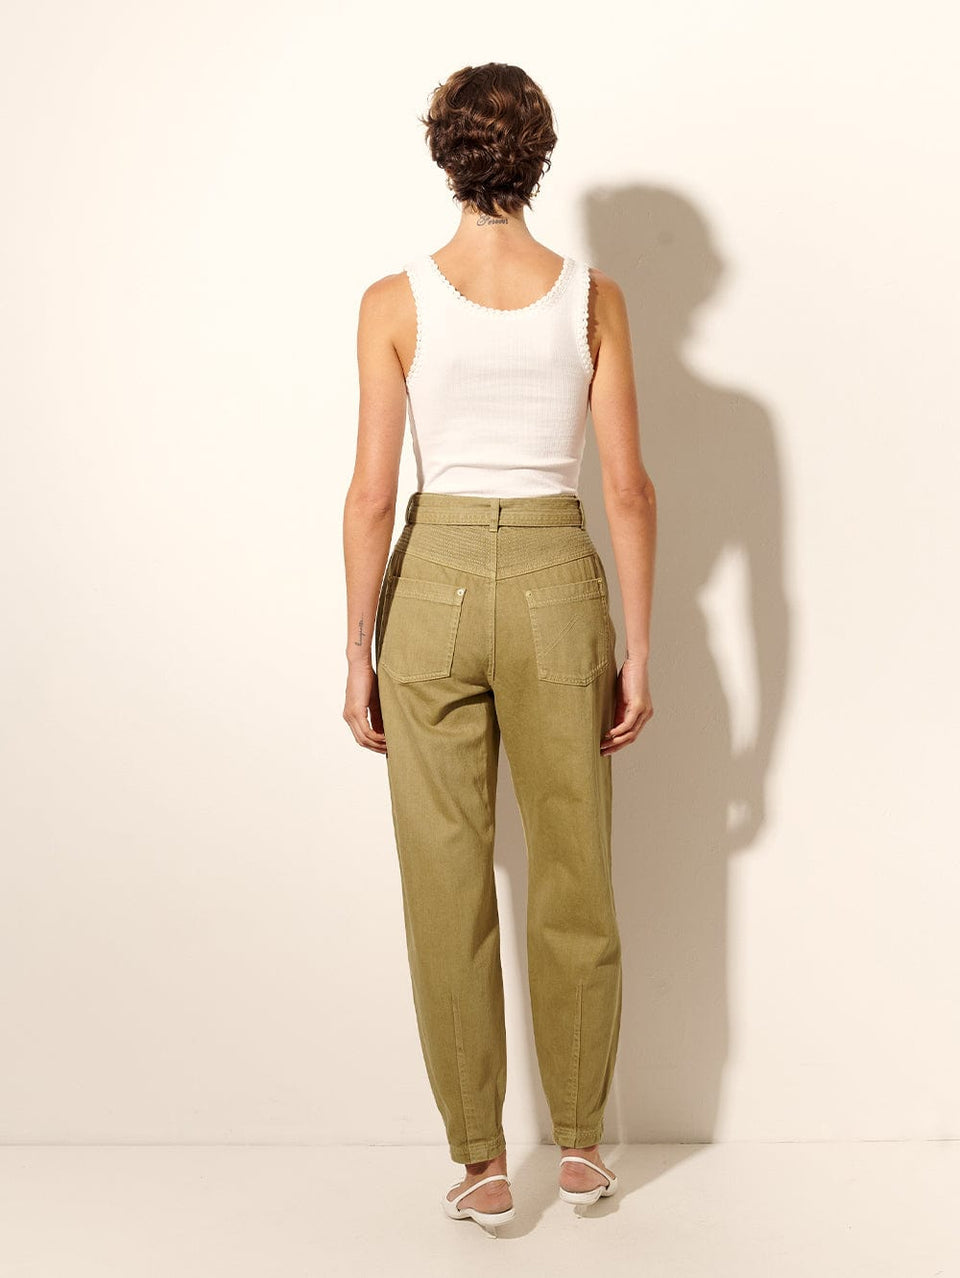 Adina Jean Khaki KIVARI | Model wears khaki jean back view